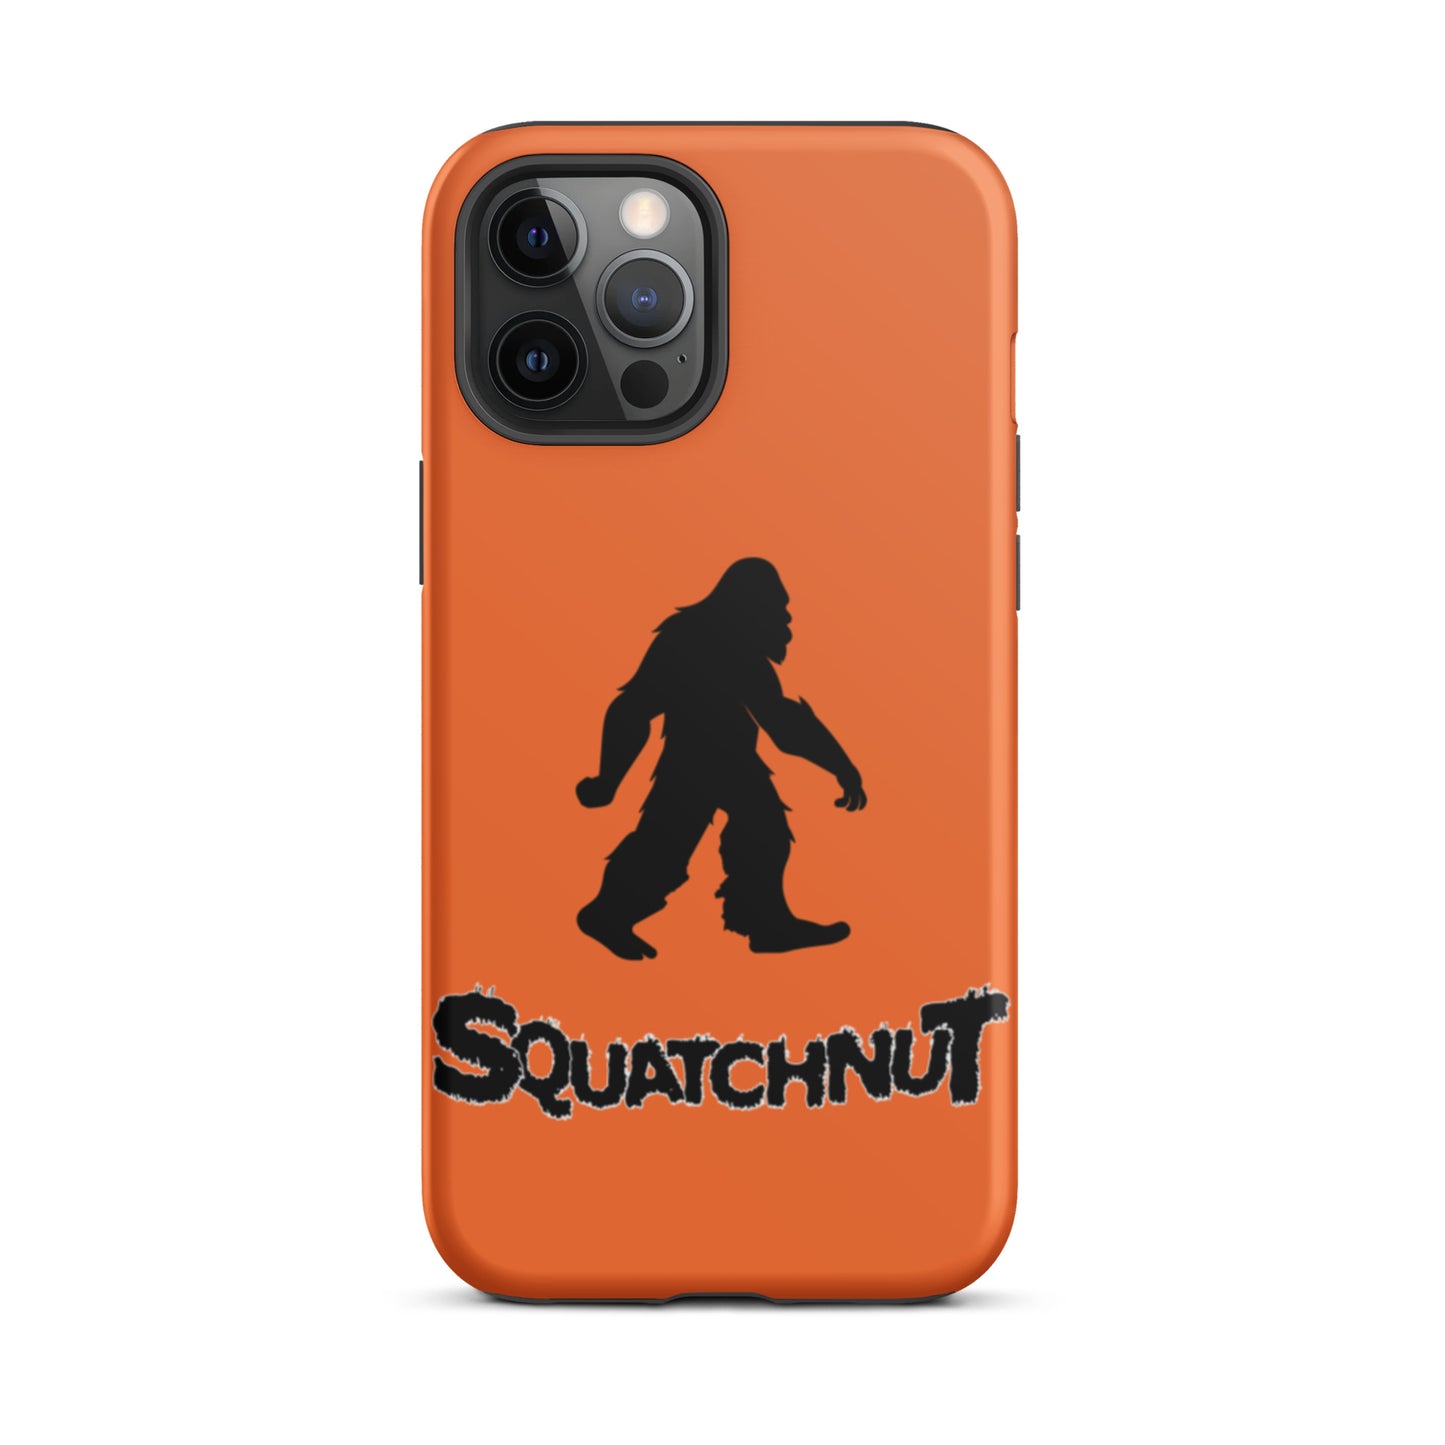 iPhone Squatchnut Tough iPhone case